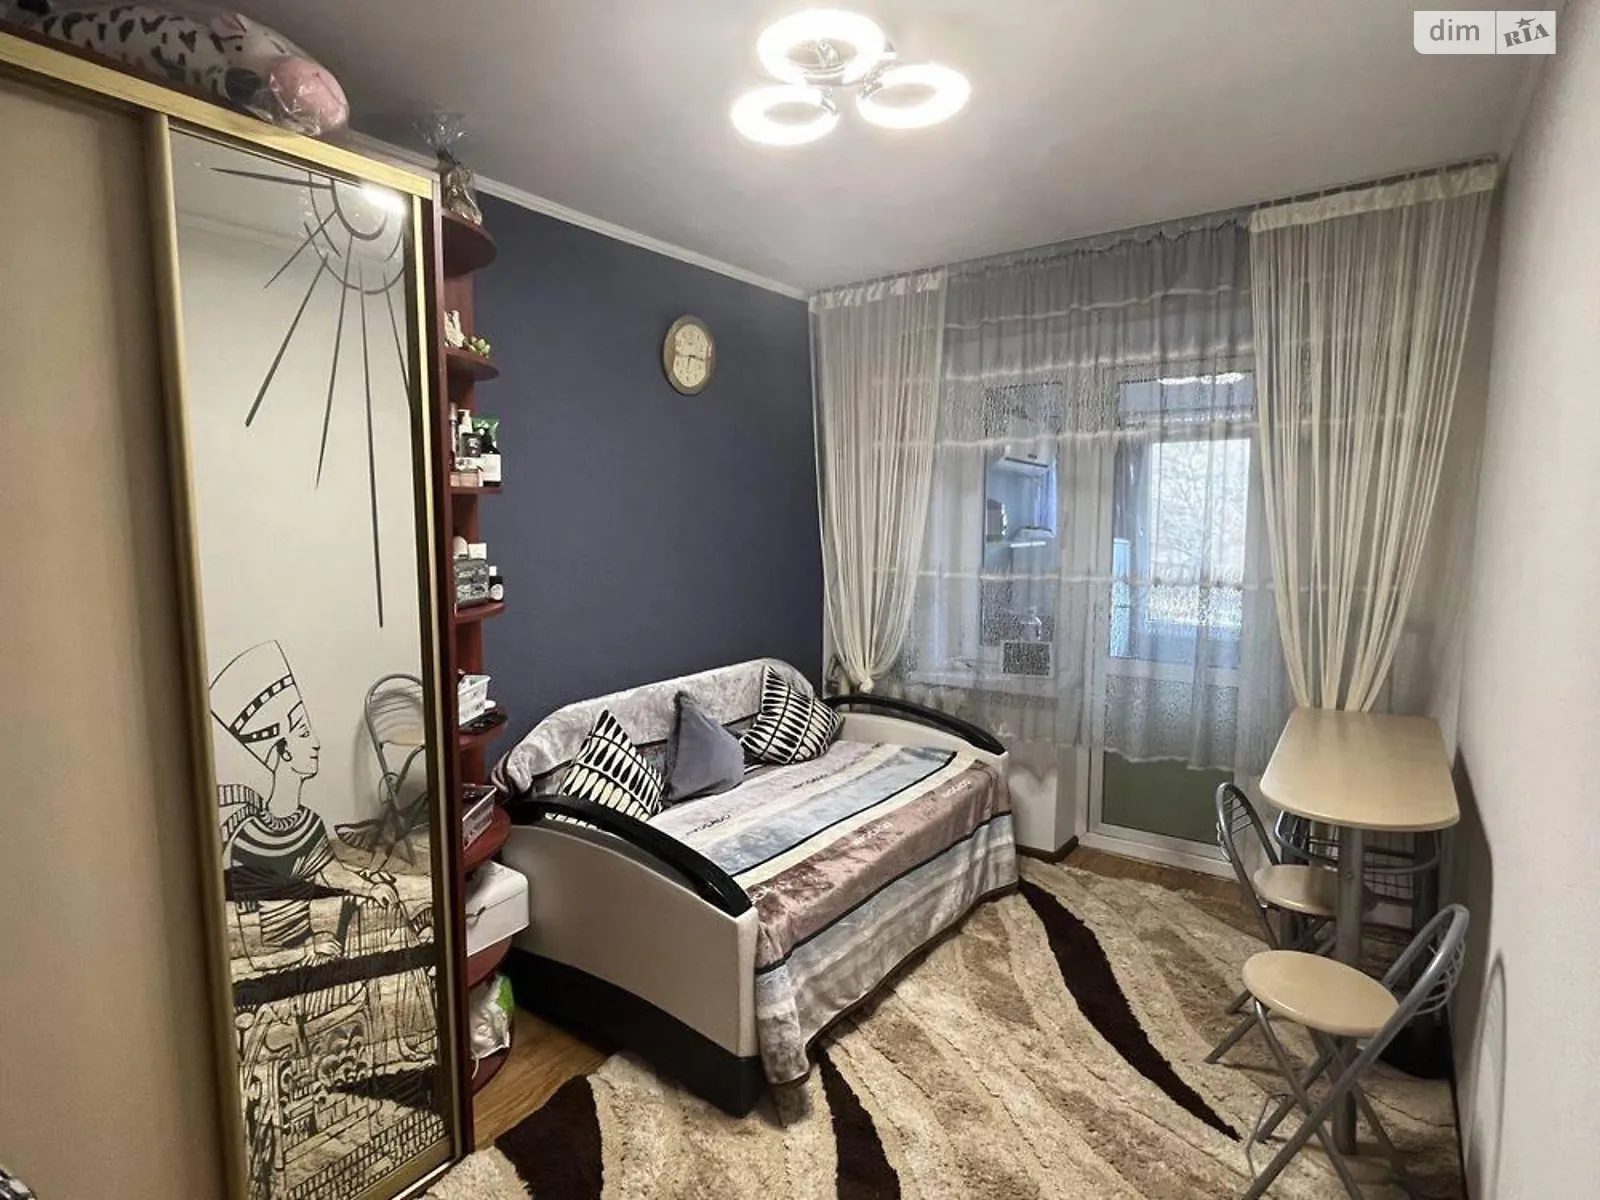 Продается комната 10.5 кв. м в Одессе, цена: 15500 $ - фото 1